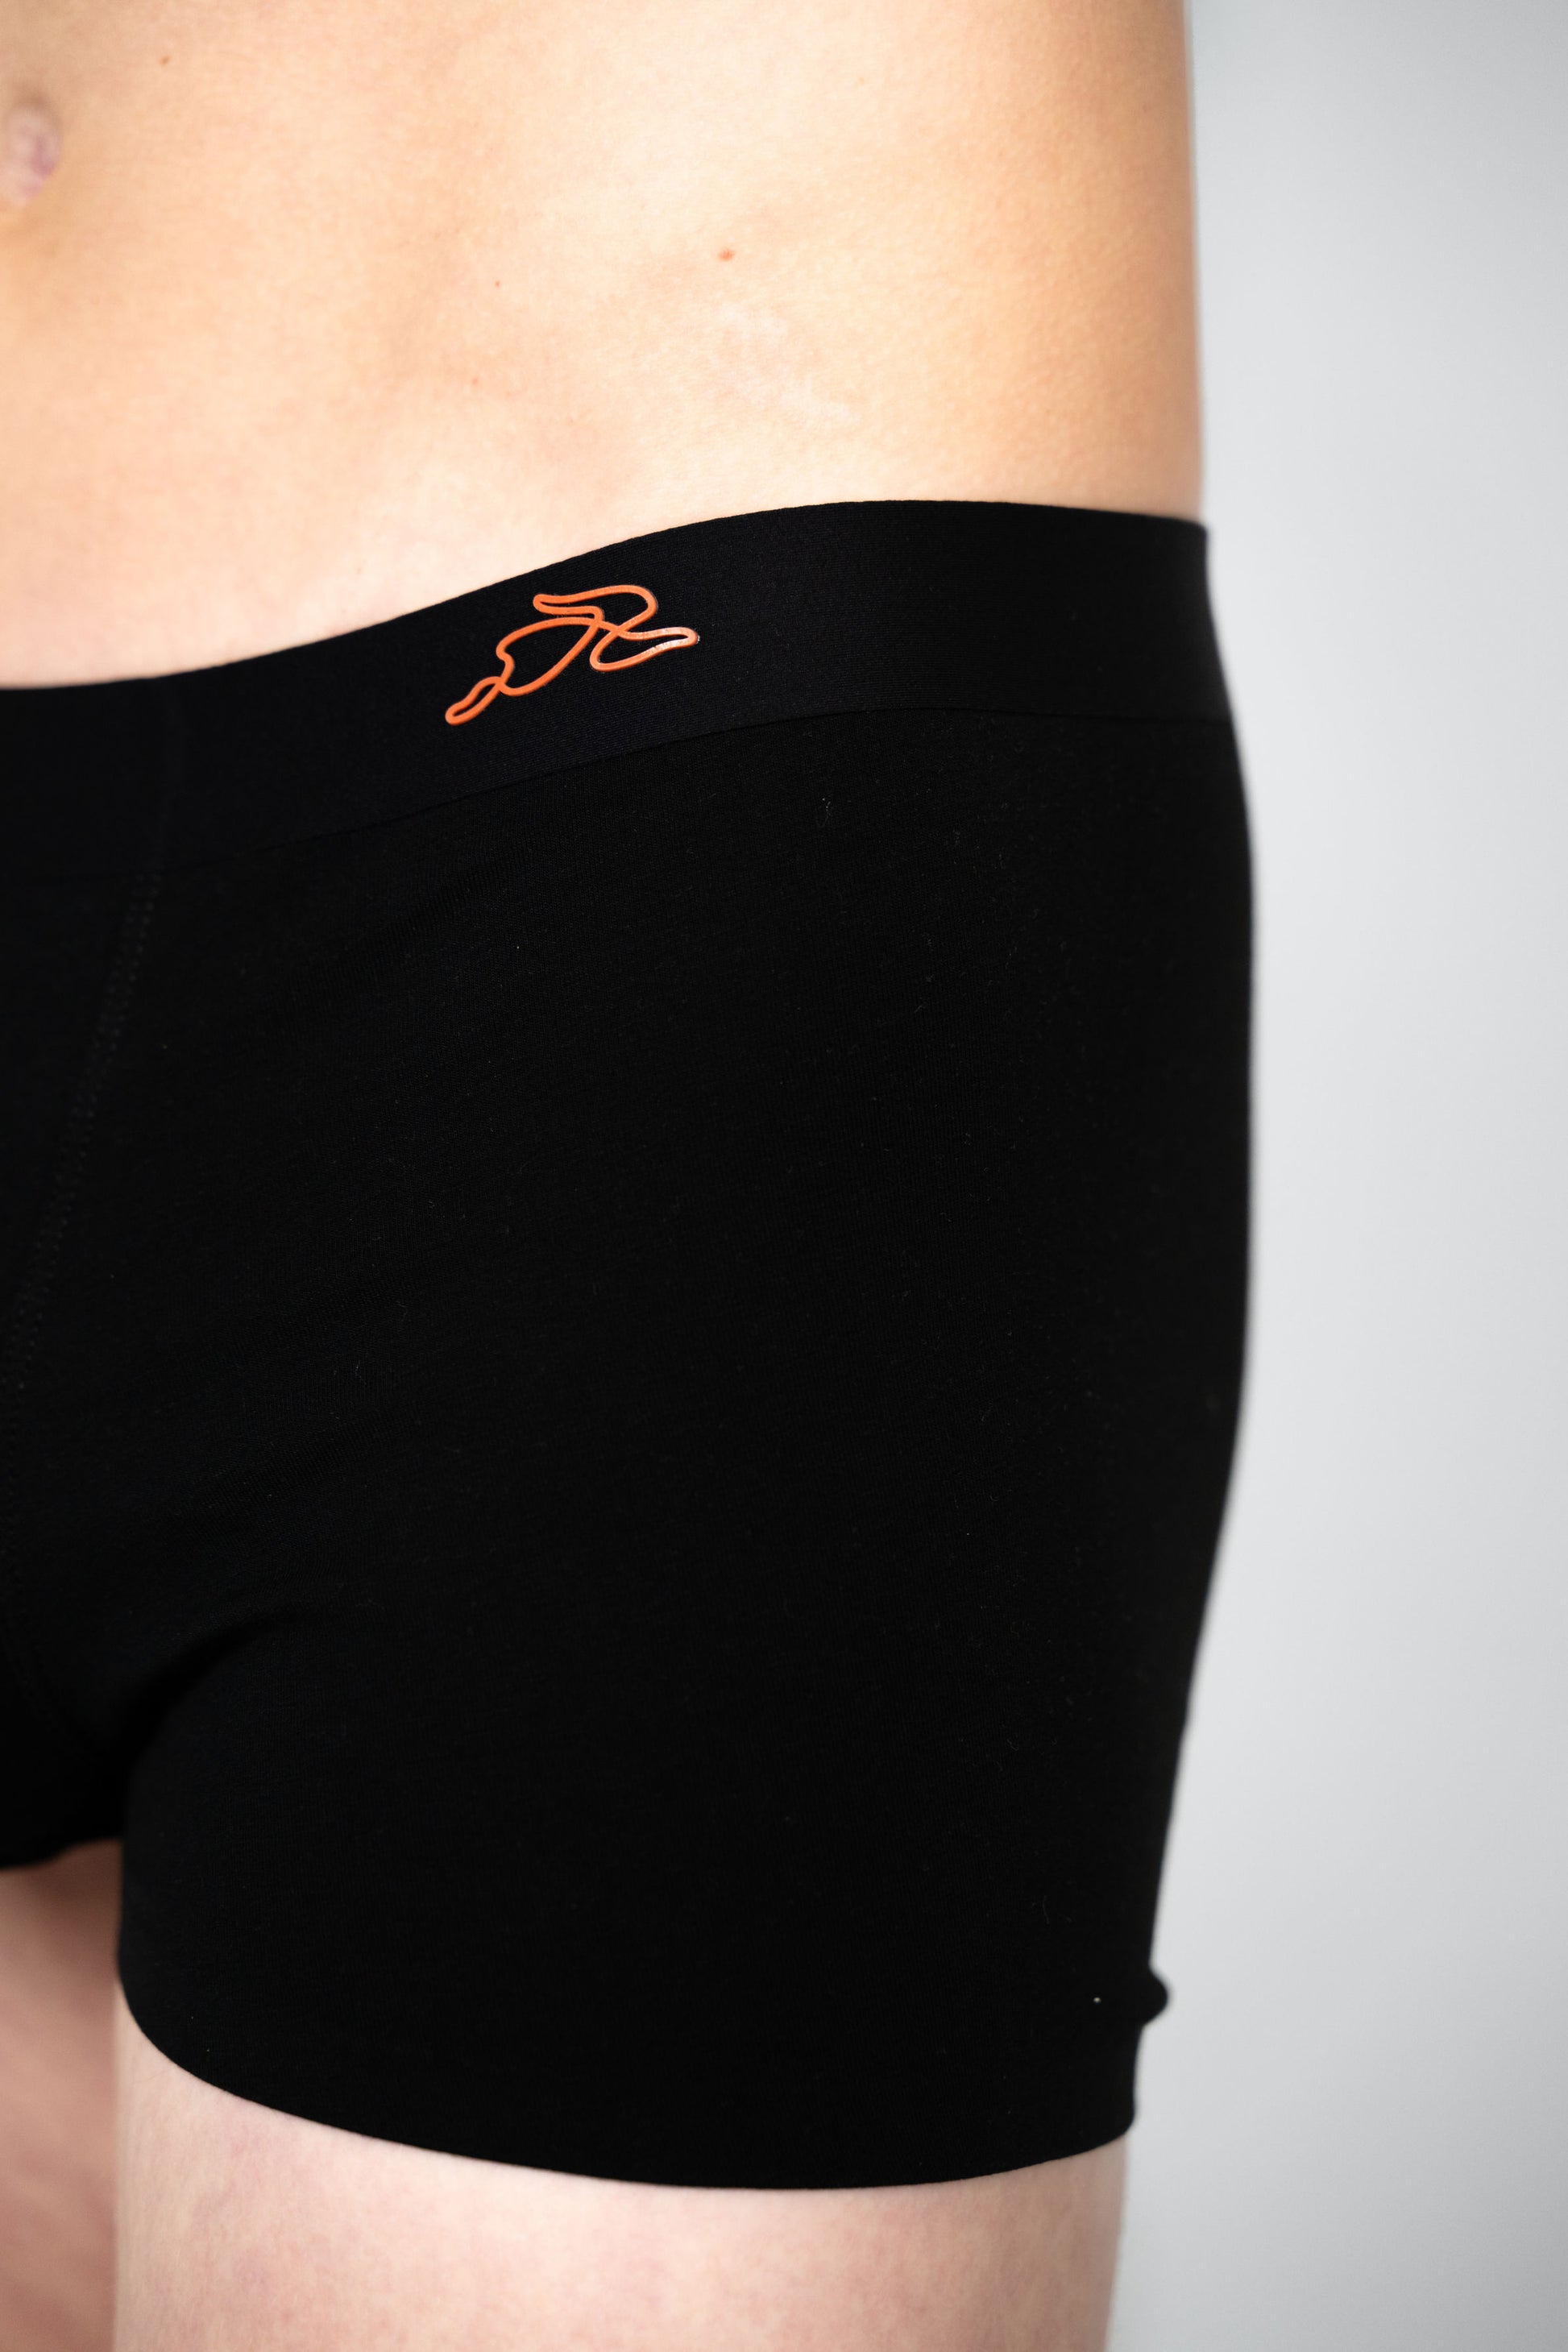 Mens Spandex Shorts | Mens Shorts with Spandex Underneath | ORCOMAT